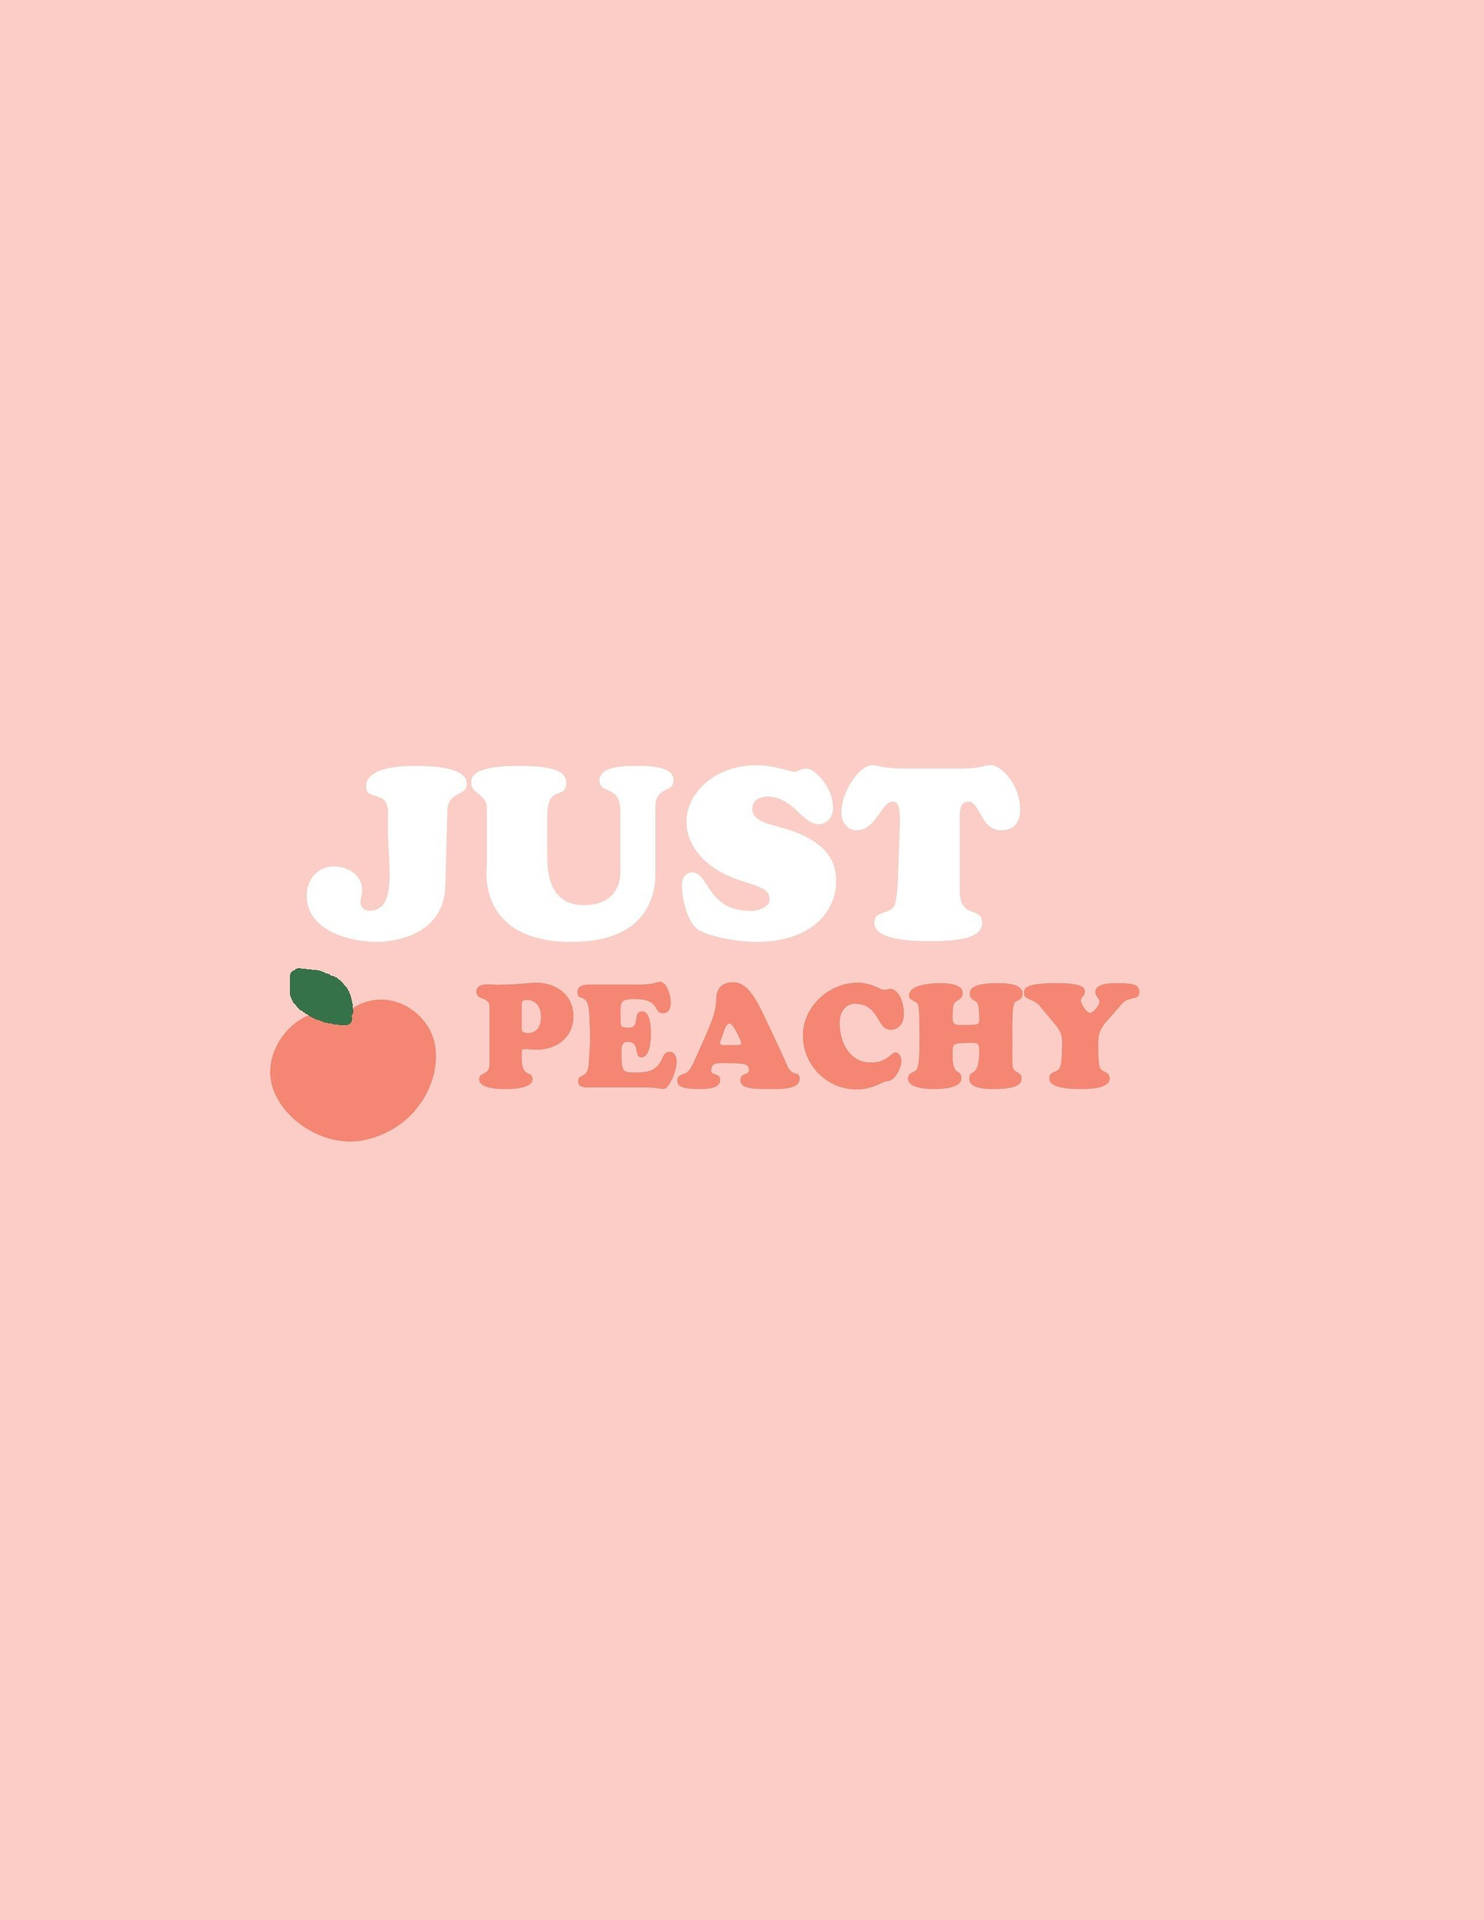 Cute Peach Wallpaper Images  Free Download on Freepik